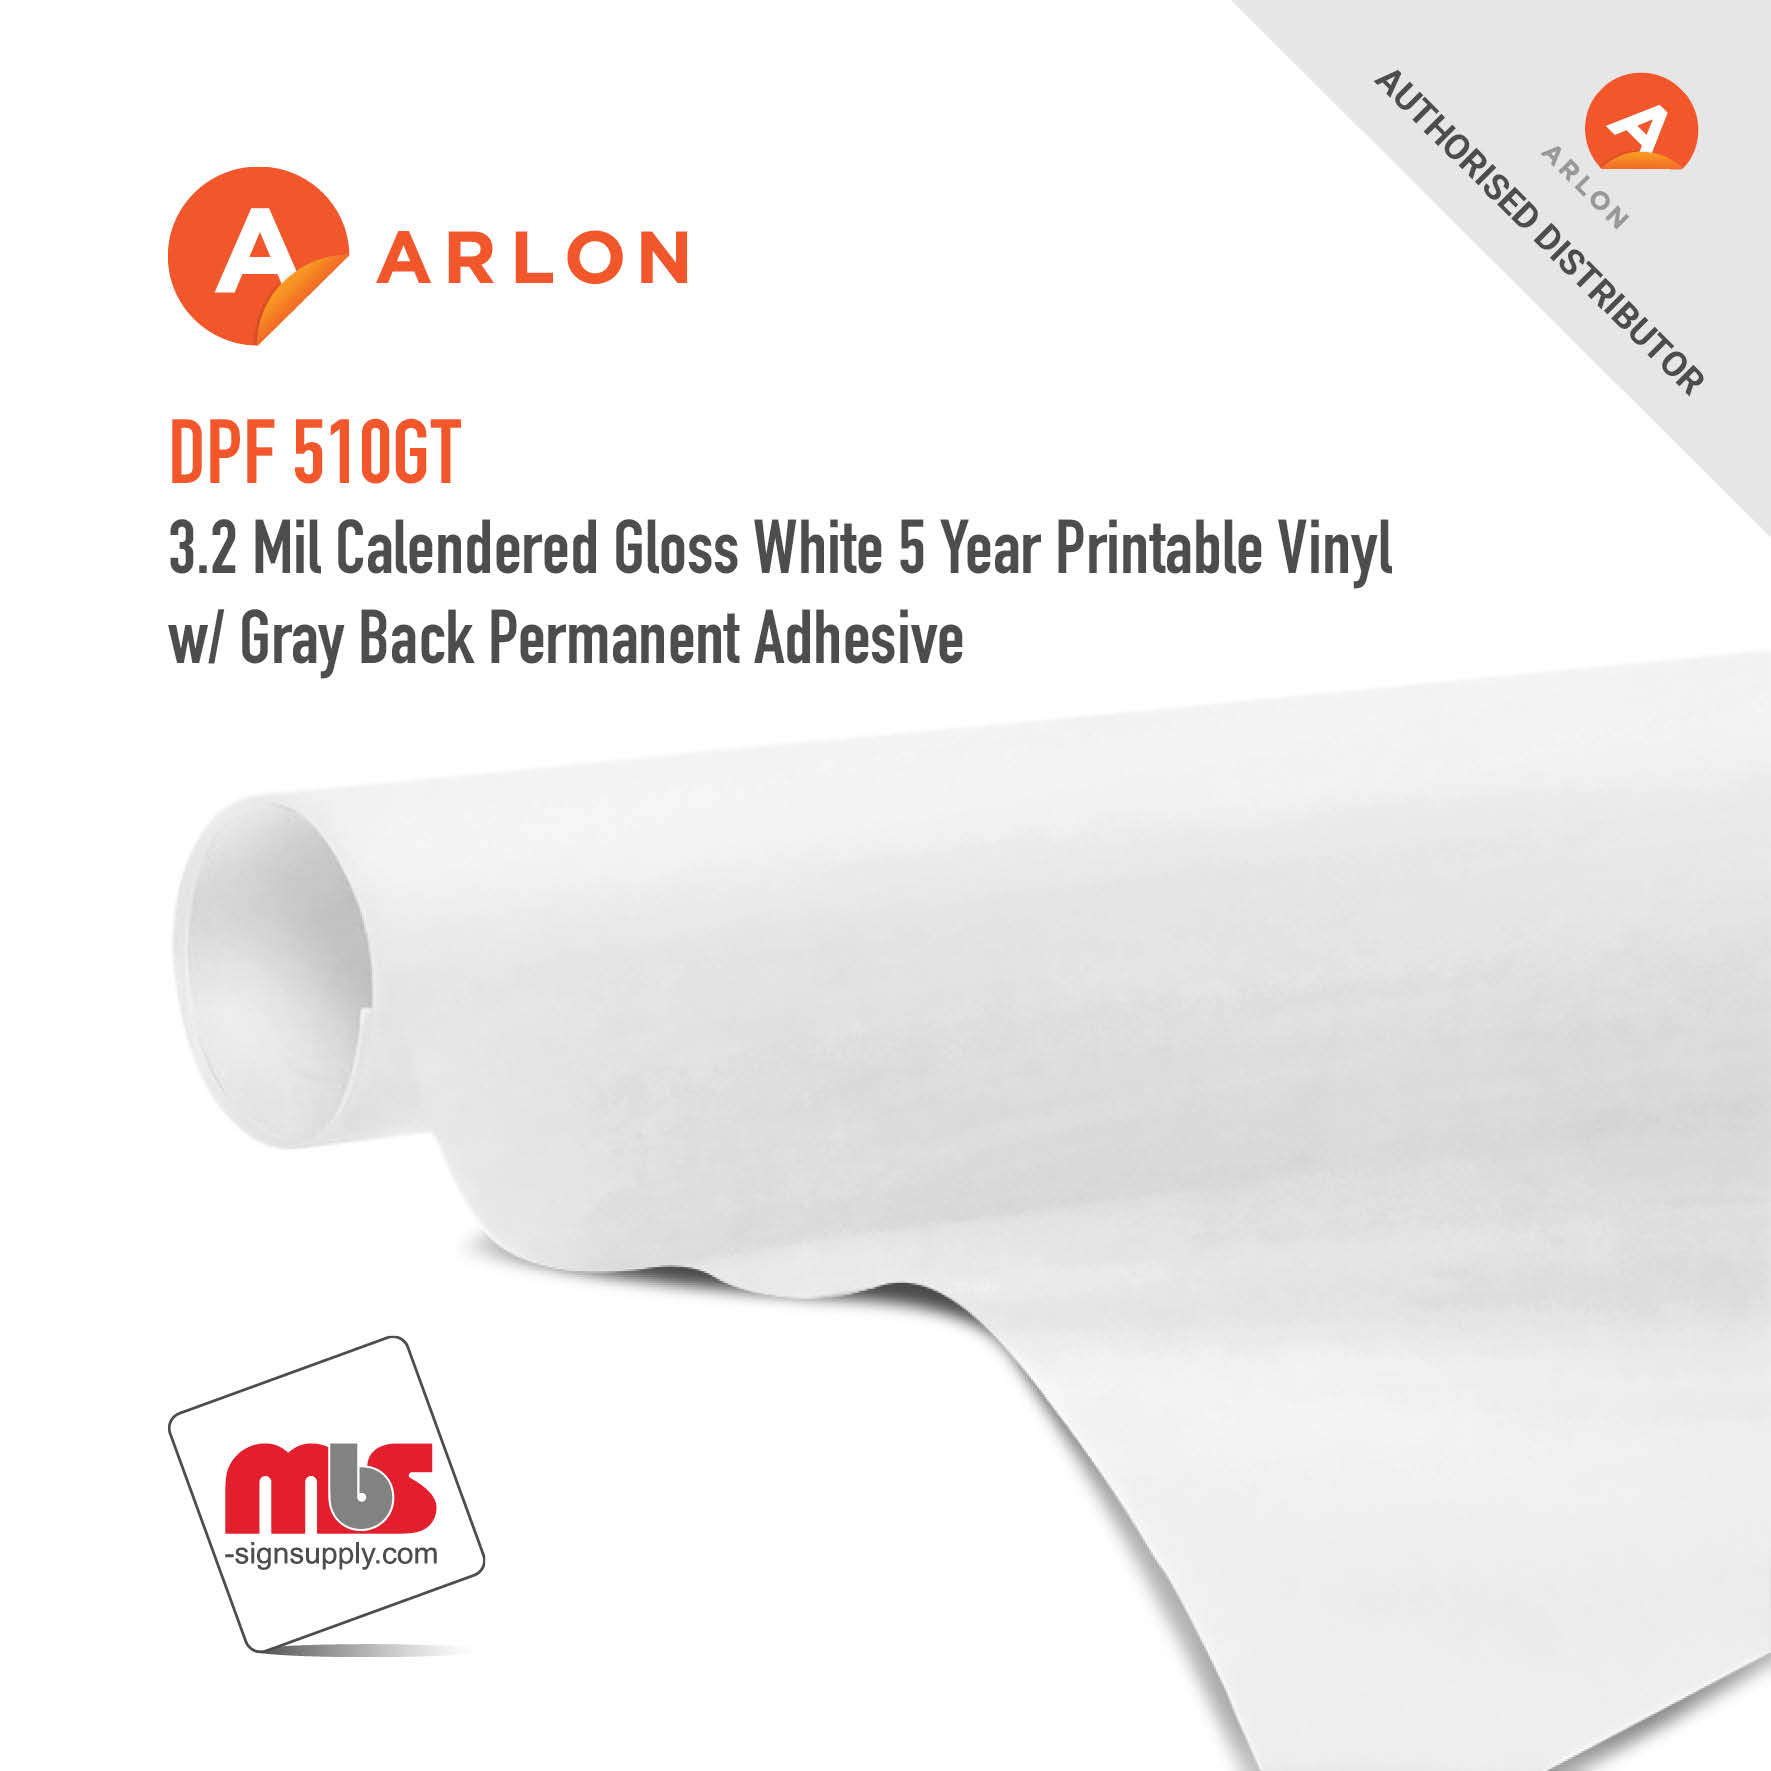 54'' x 50 Yard Roll - Arlon DPF 510GT 3.2 Mil Calendered Gloss White 5 Year Printable Vinyl w/  Gray Back Permanent Adhesive